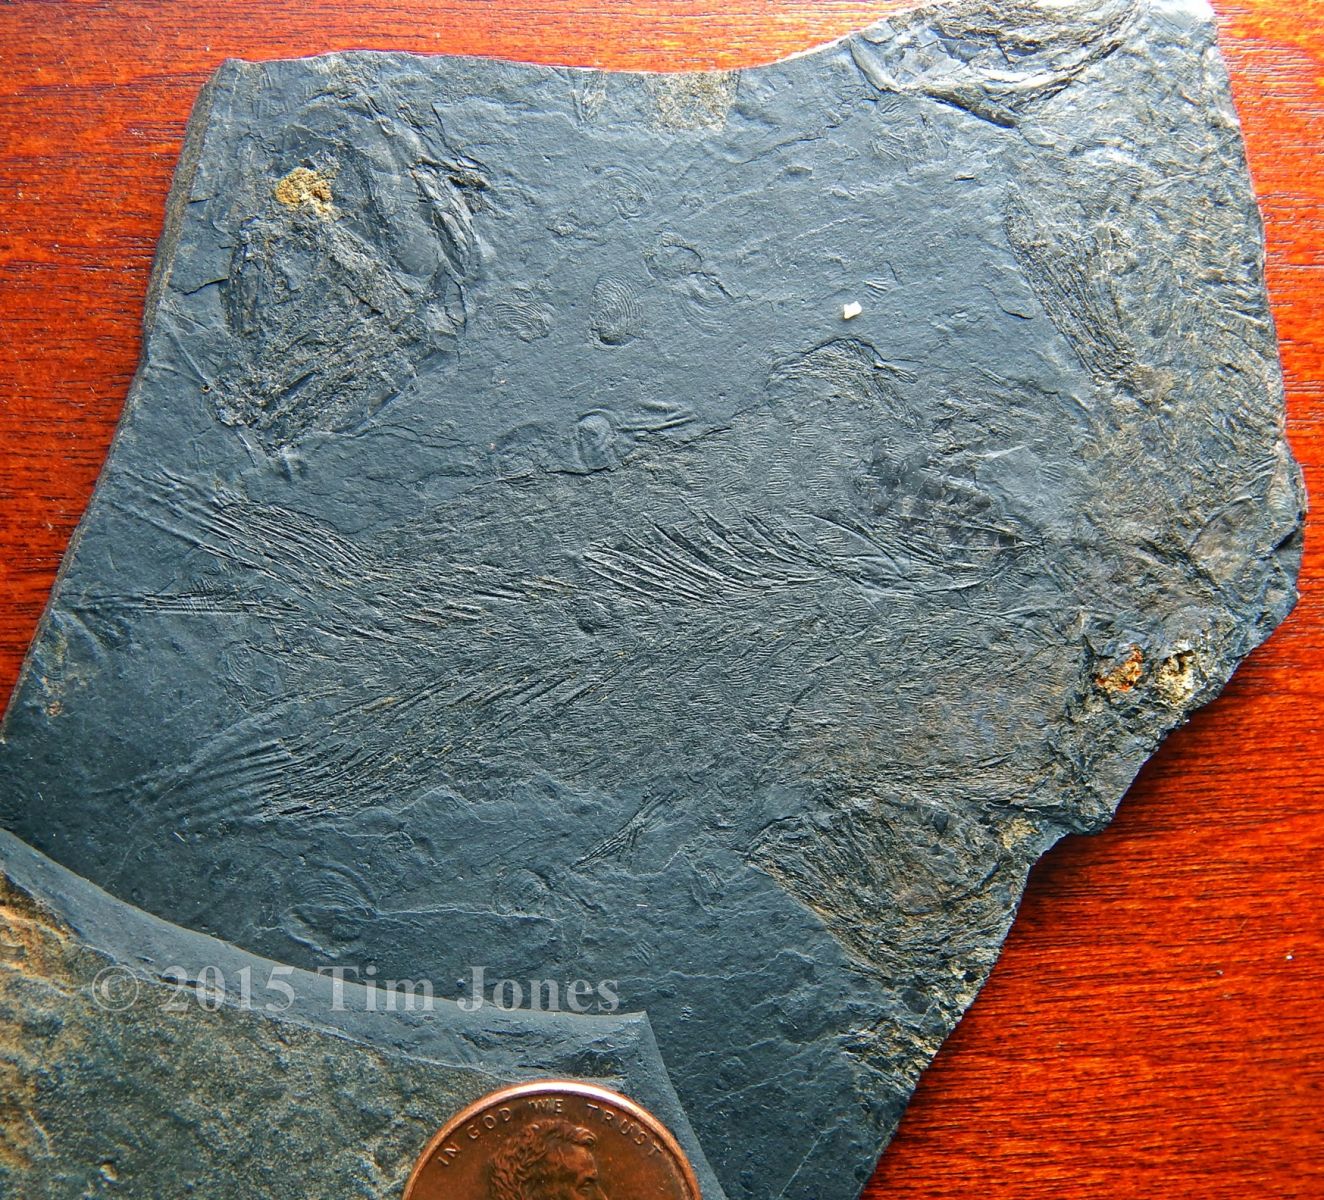 Diplurus newarki - Late Triassic coelacanth